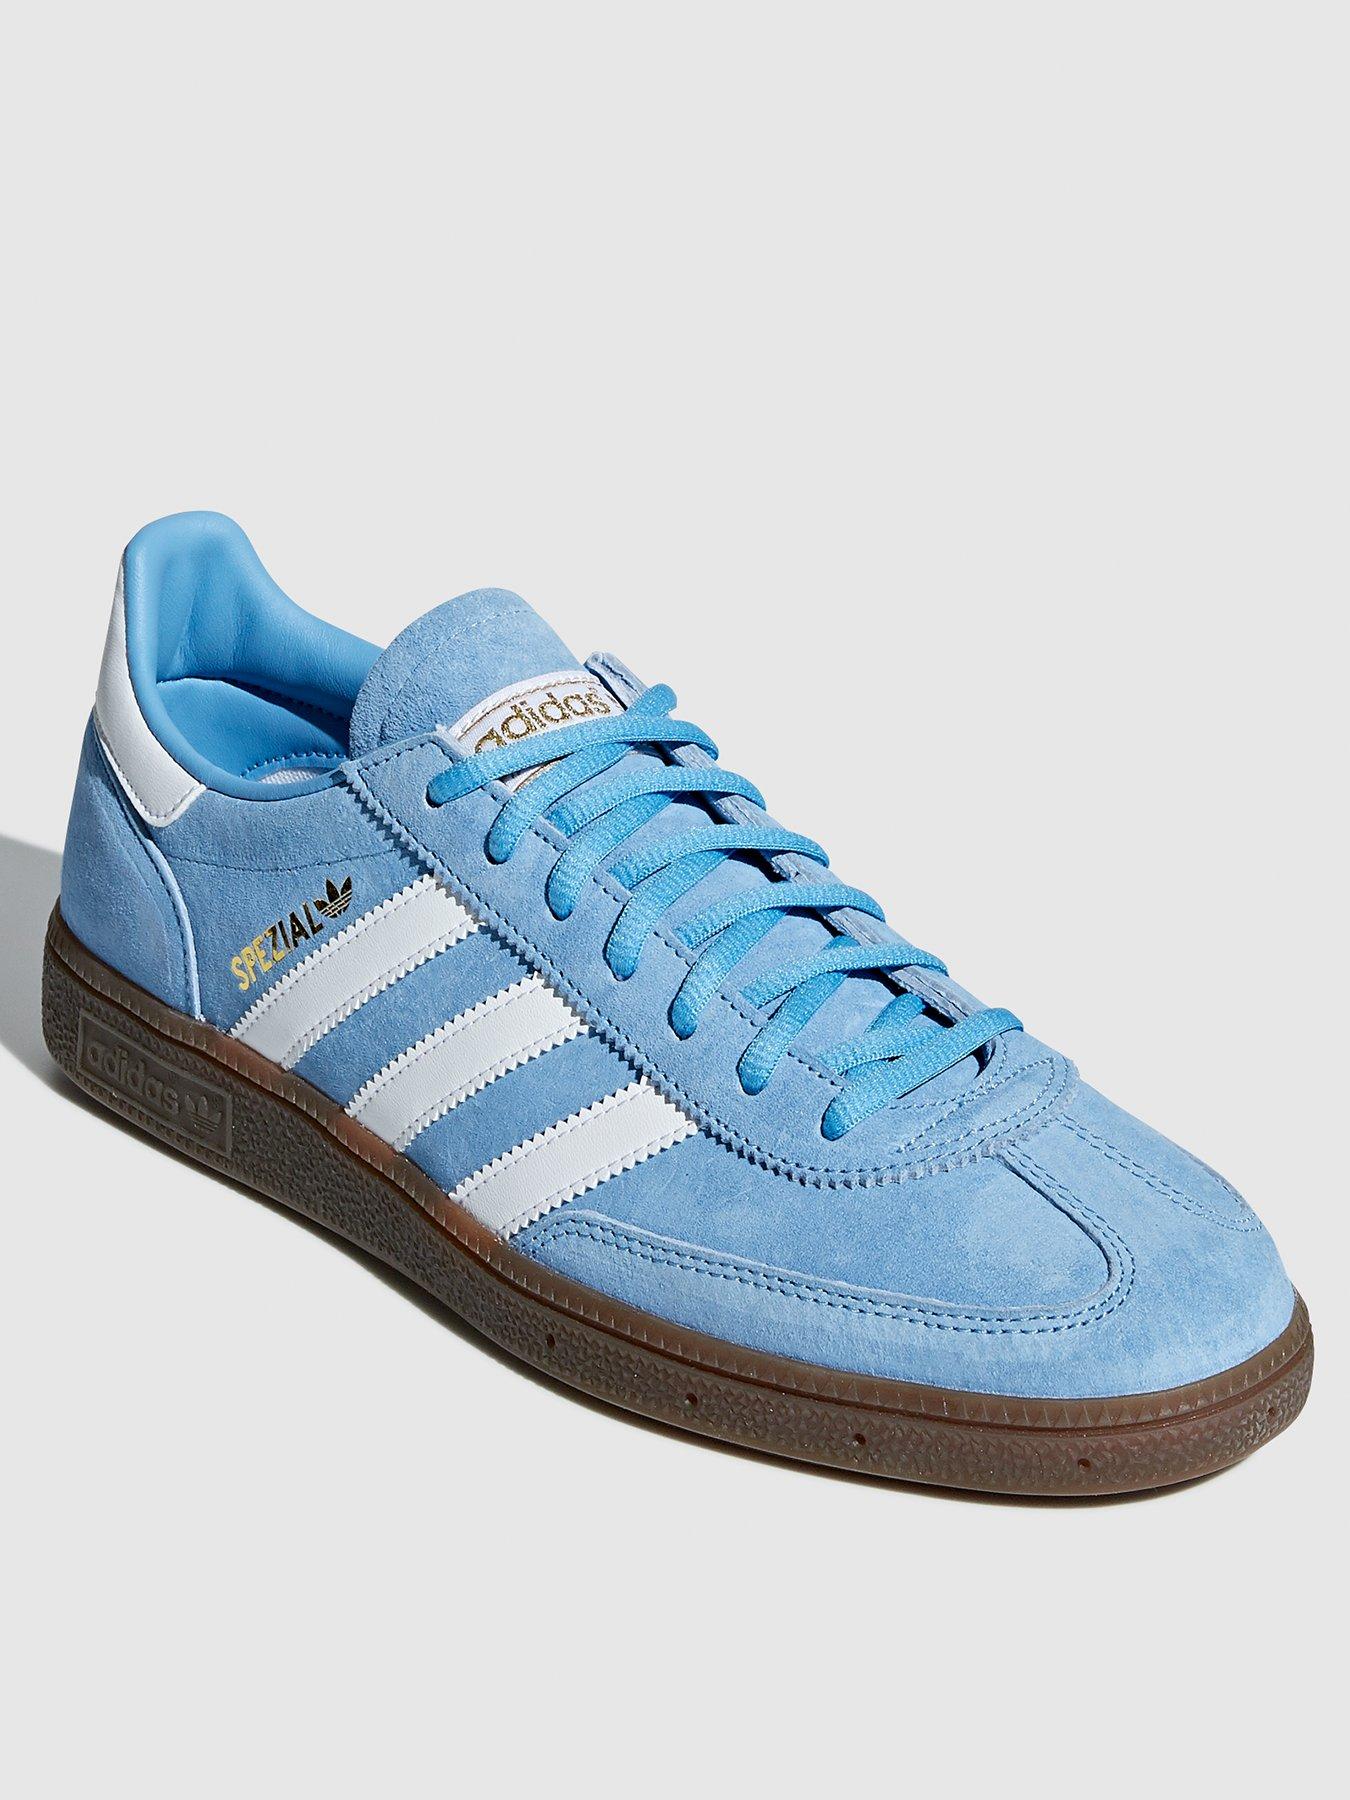 adidas spezial trainers blue